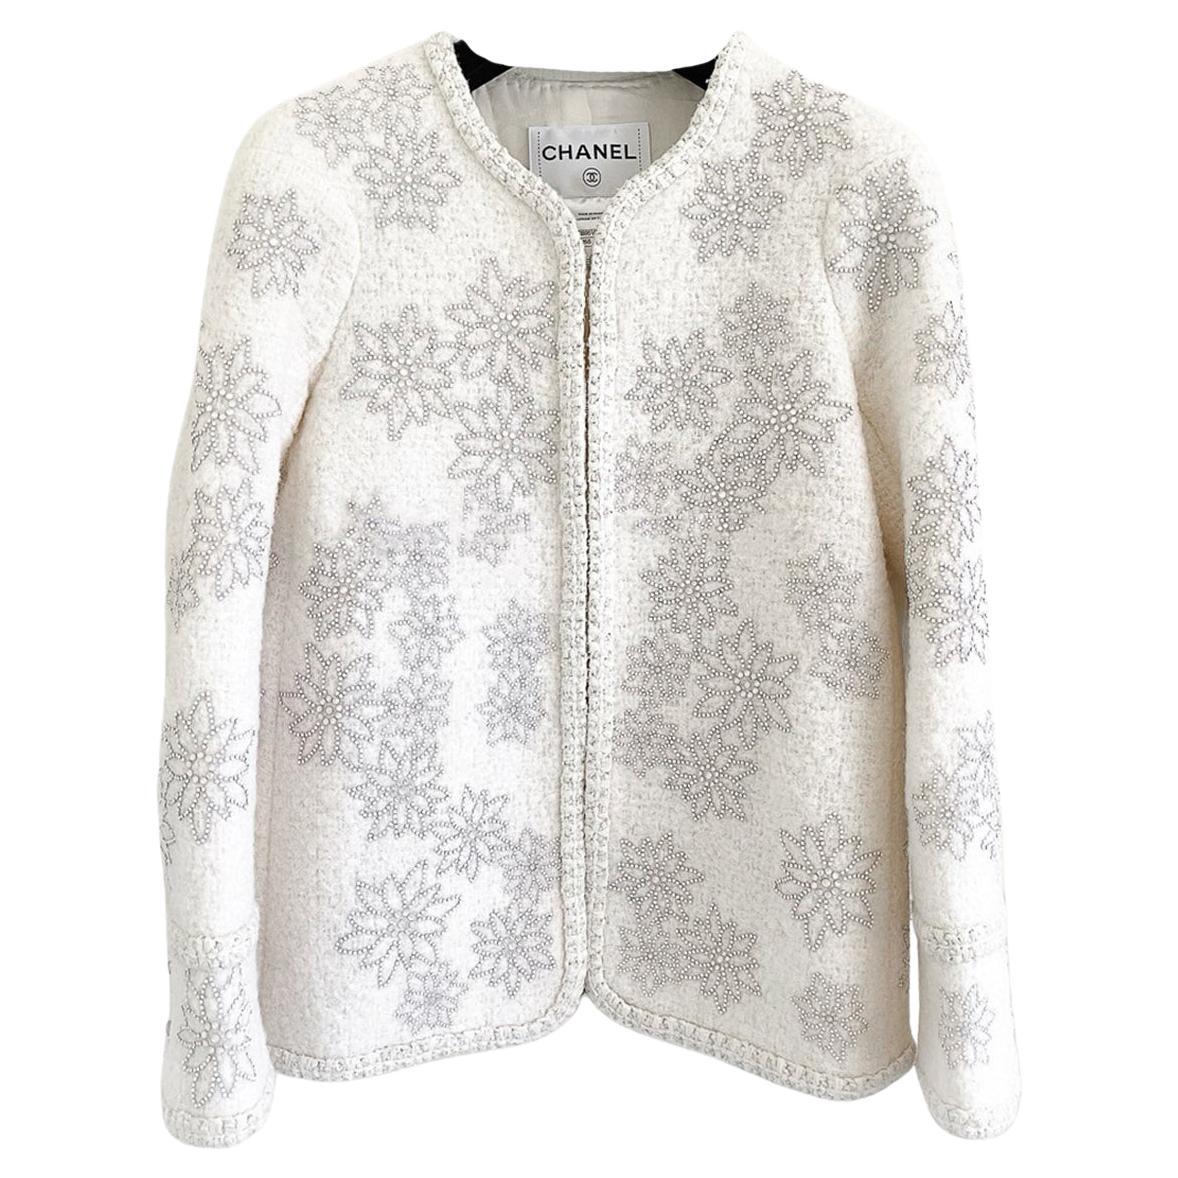 Chanel Couture Paris / Salzburg Edelweiss Tweed-Jacke